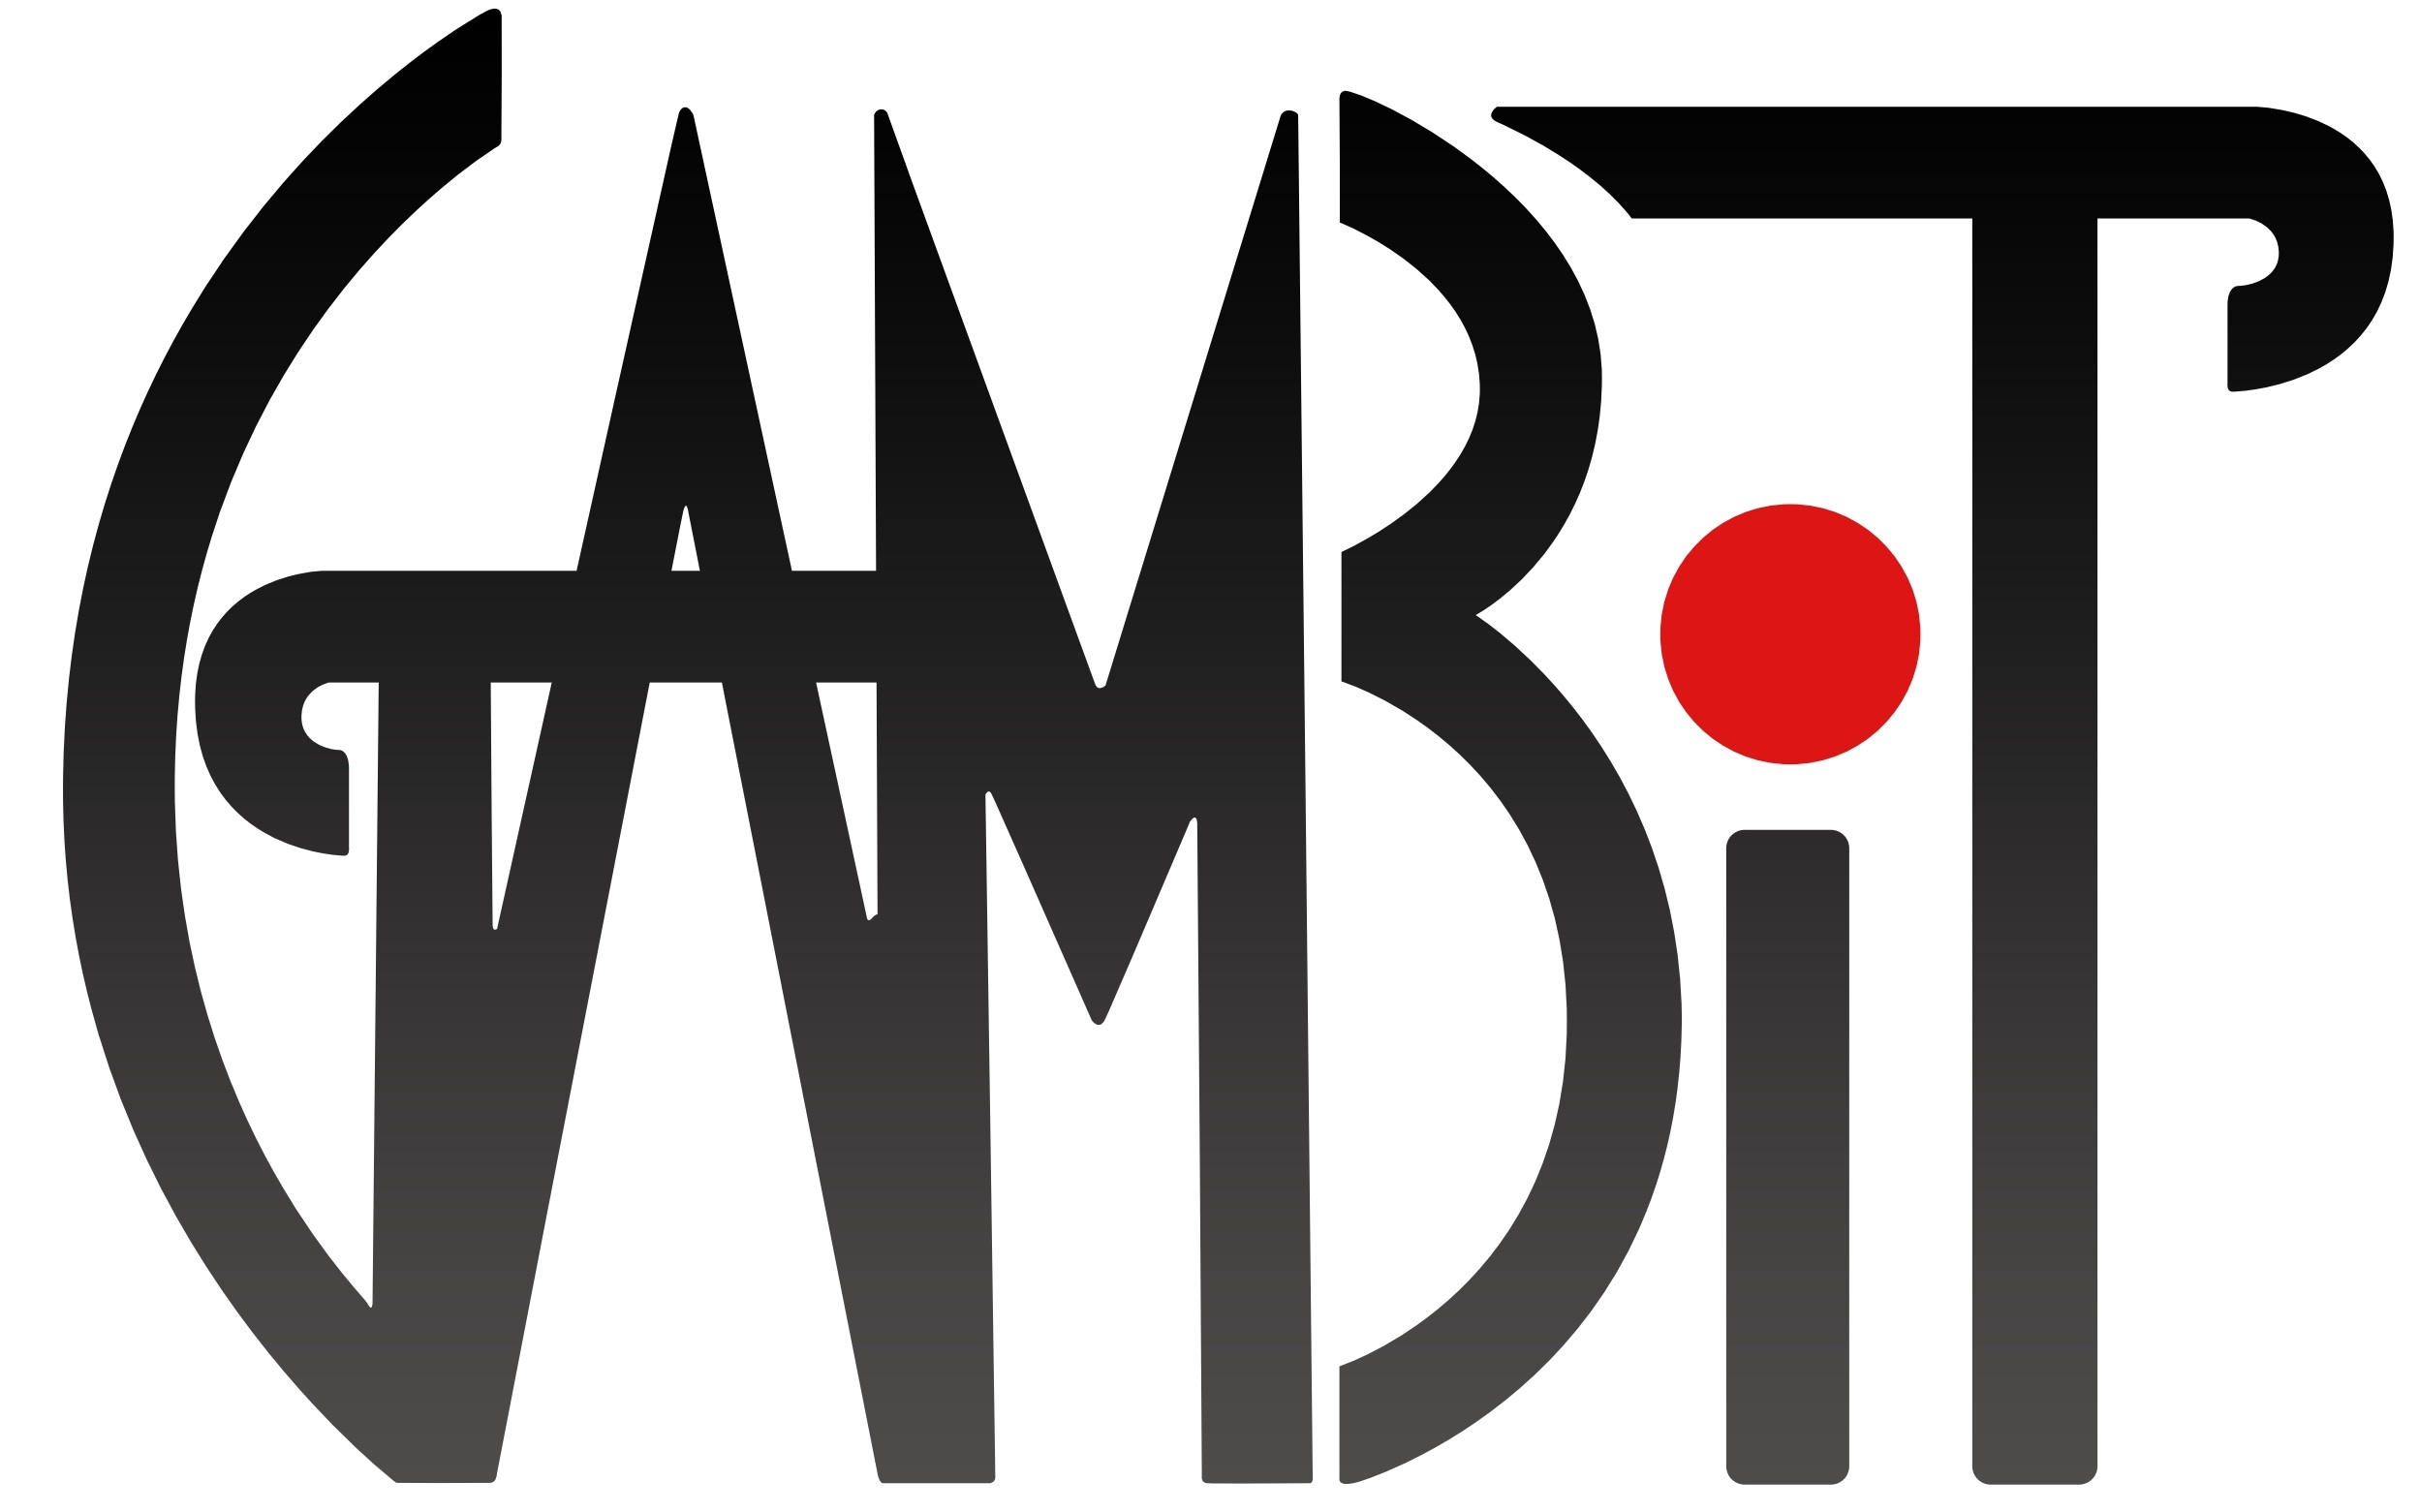 GAMBIT Logo.jpg 6f5c6f73c9eab291bbb56b5b8b557360